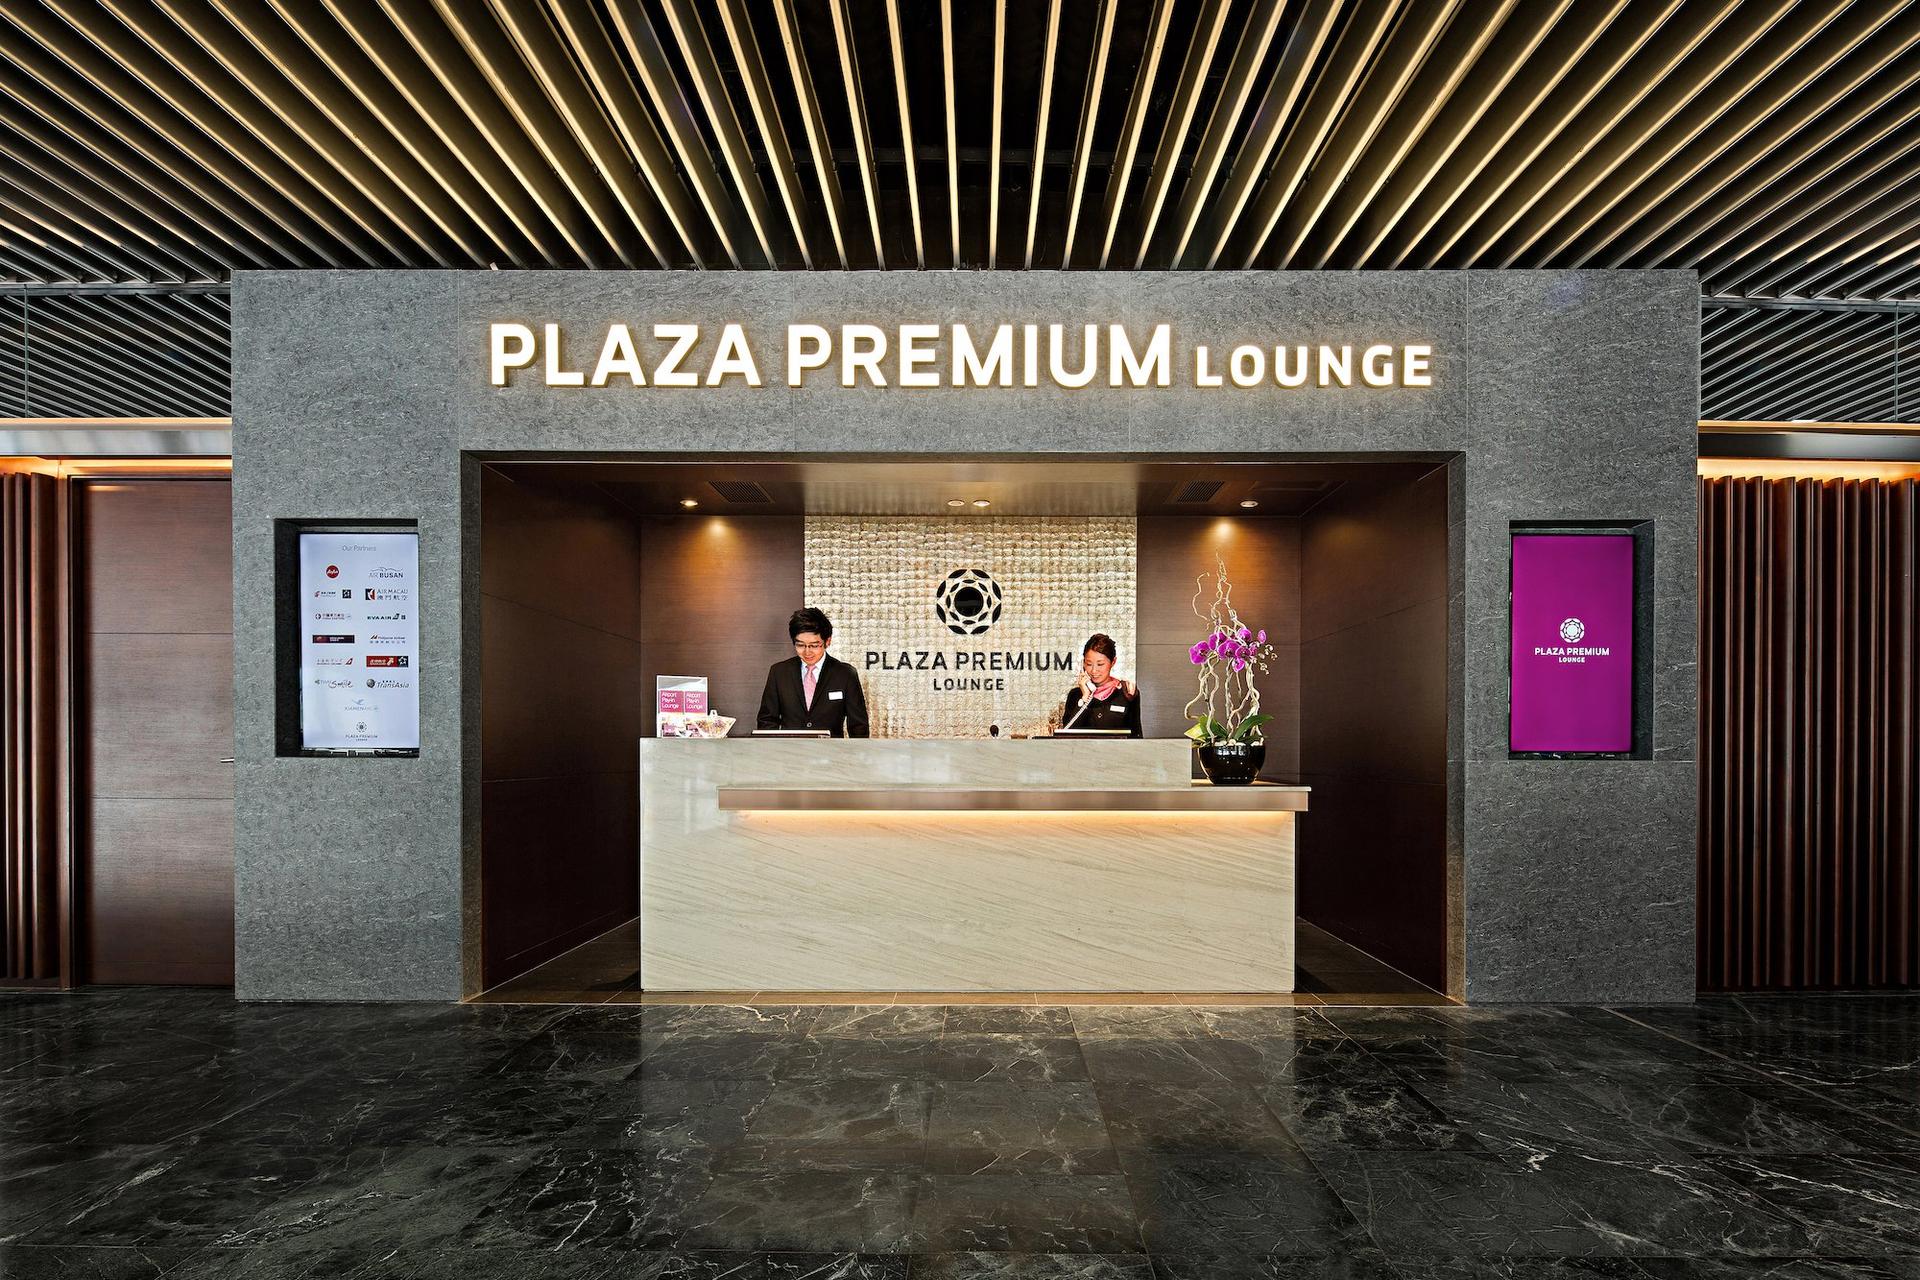 Plaza Premium Lounge image 37 of 37